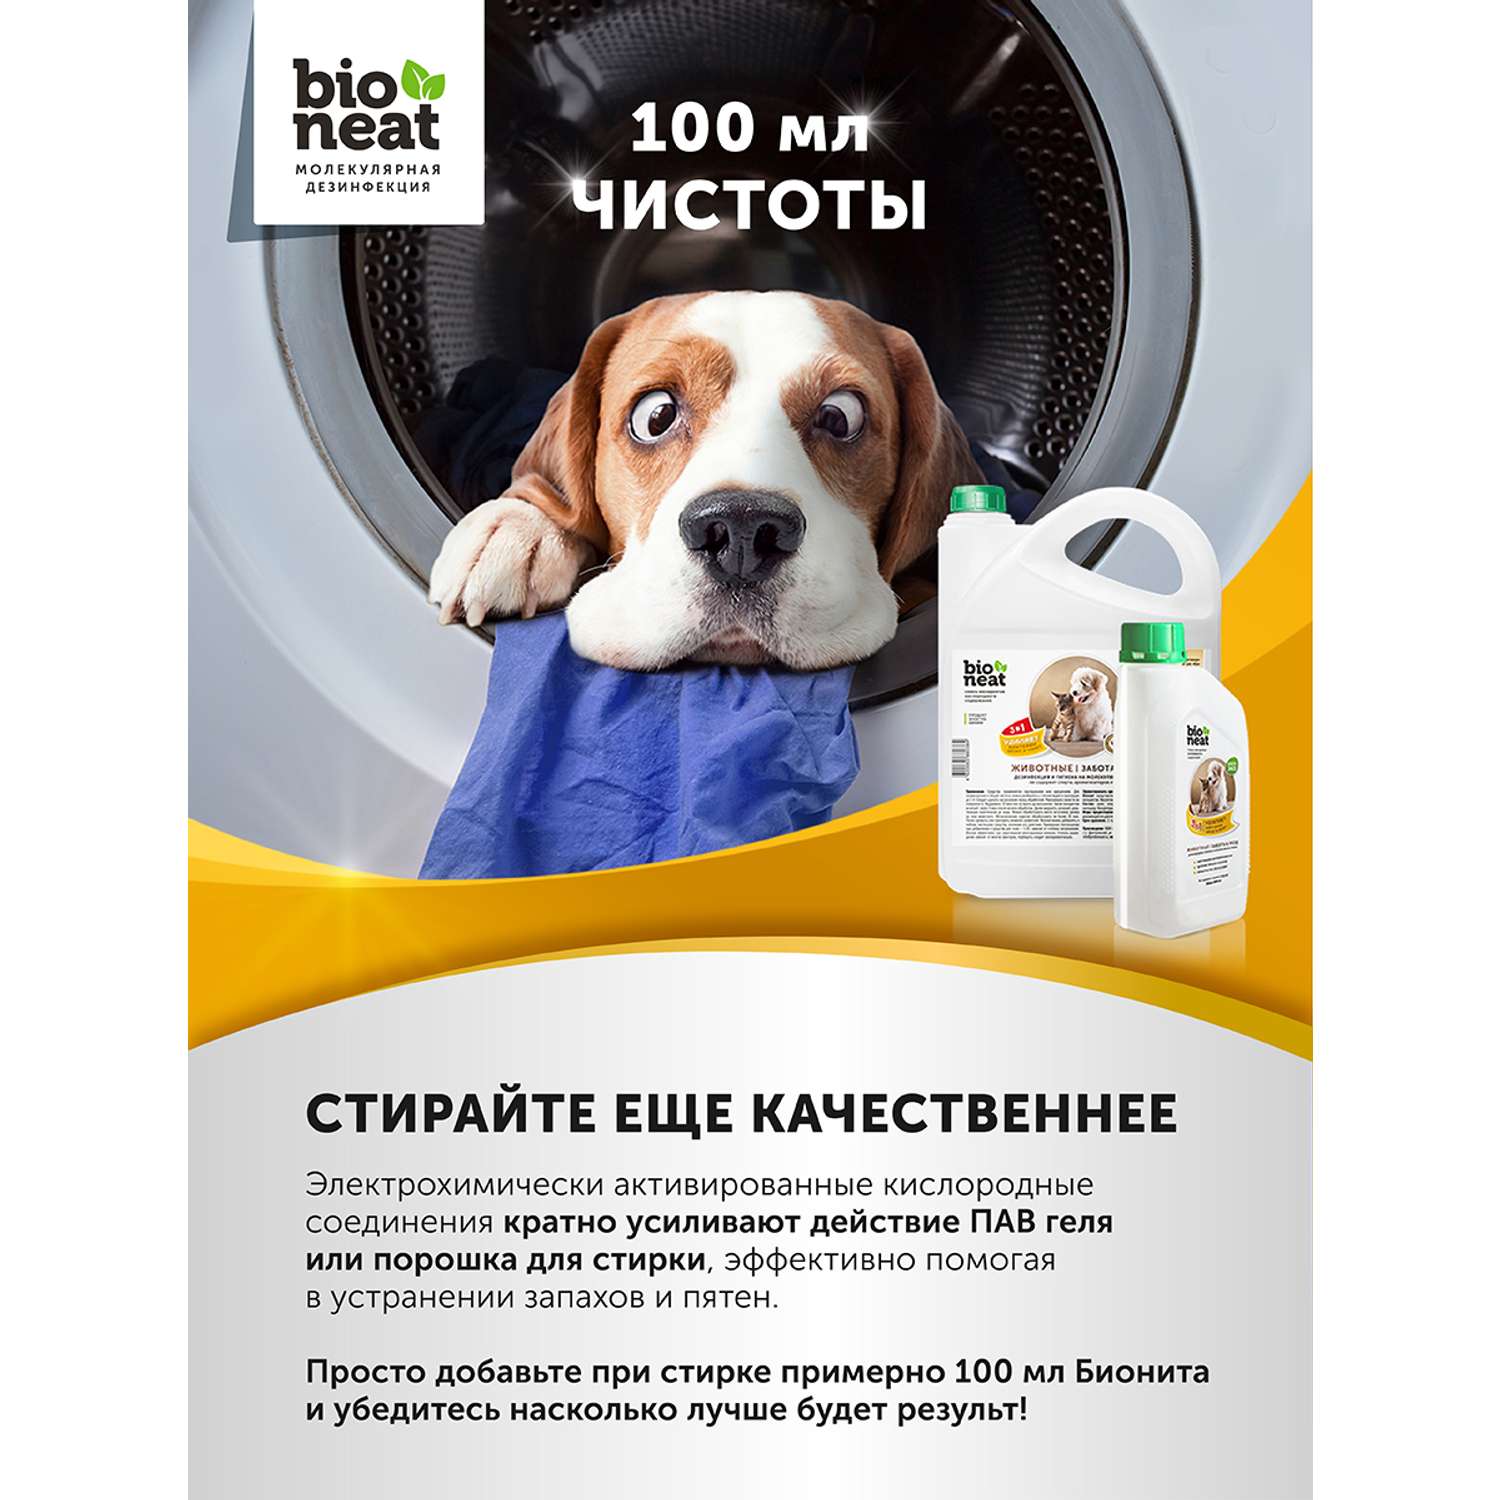 Дезинфицирующее средство Bioneat для обработки и устранения запахов Кошки 500 мл - фото 7